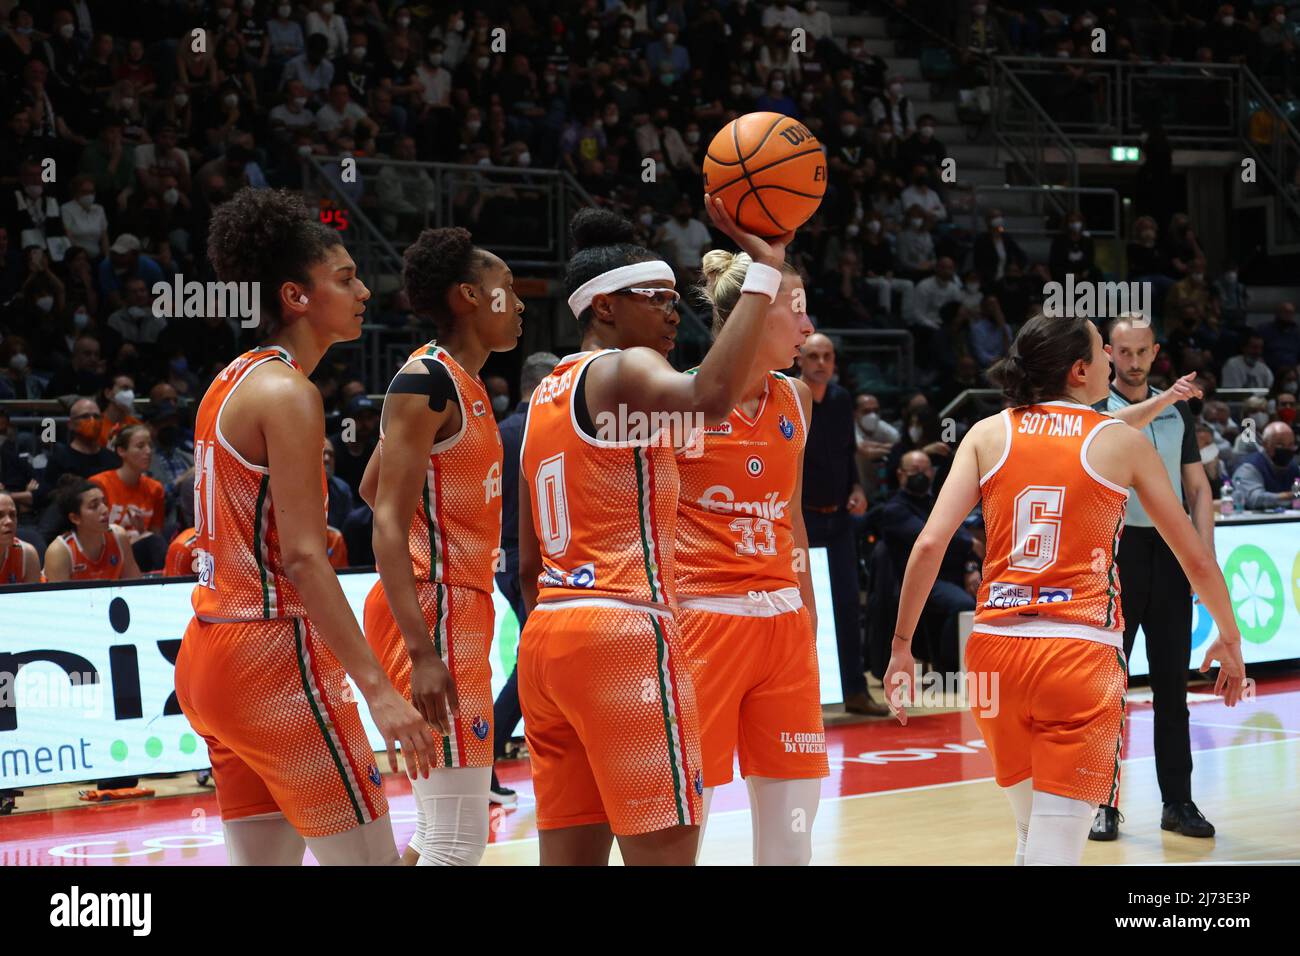 5 mai 2022, Bologne, Italie: Famila Schio basket équipe pendant le match 4  final du championnat italien de basket-ball féminin de la série A1 jeu  Virtus Segafredo Bologna vs. Famila Schio au